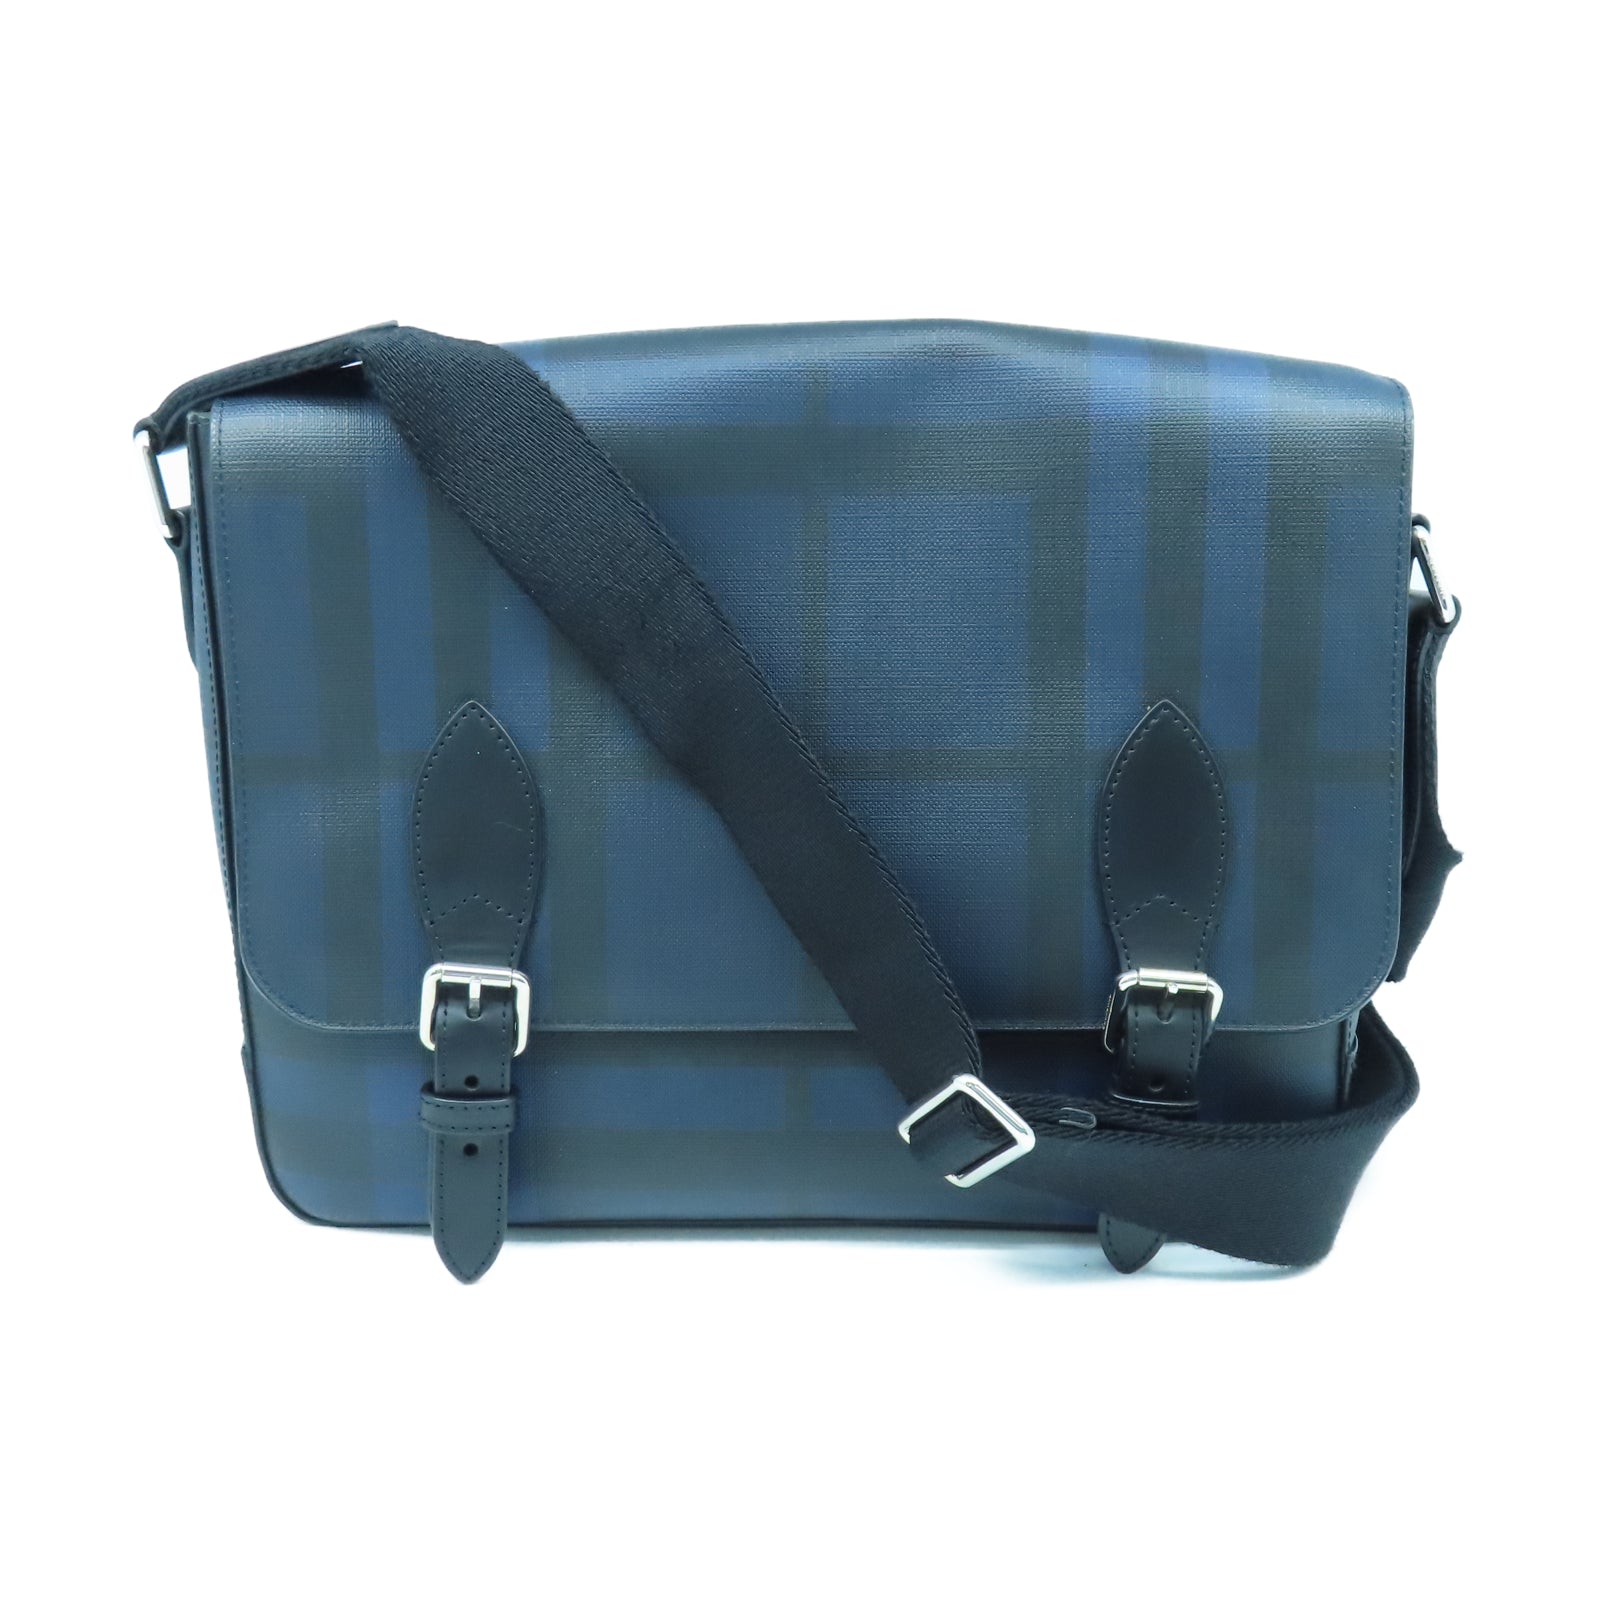 shoulder bag with logo burberry bag dark canvas blue